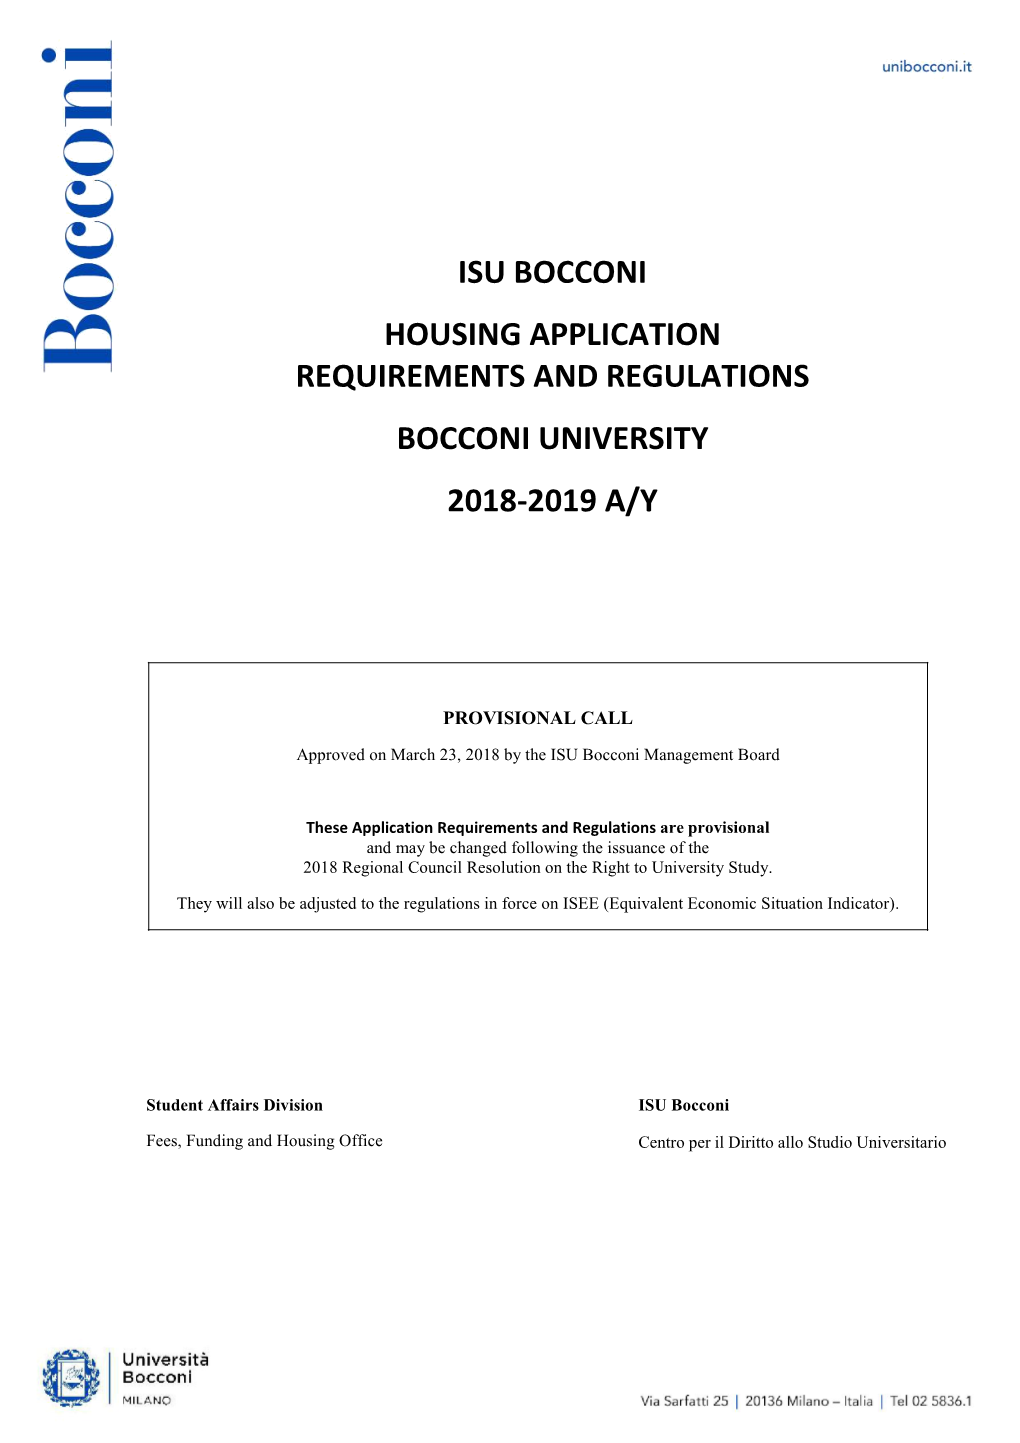 Isu Bocconi Housing Application Requirements